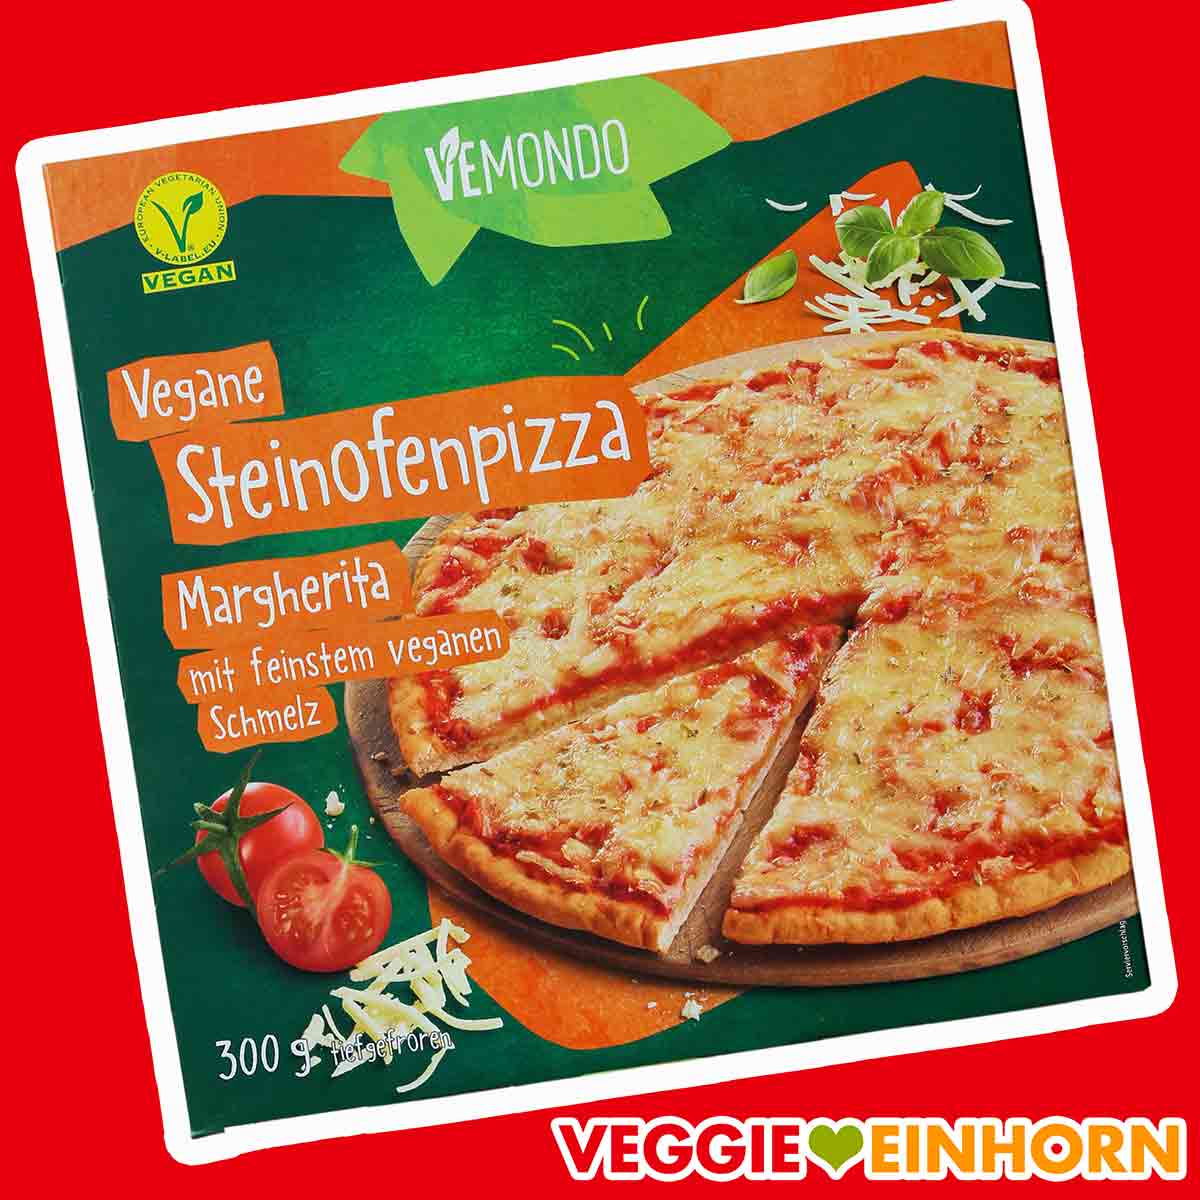 Vegane Pizza Margherita von Lidl